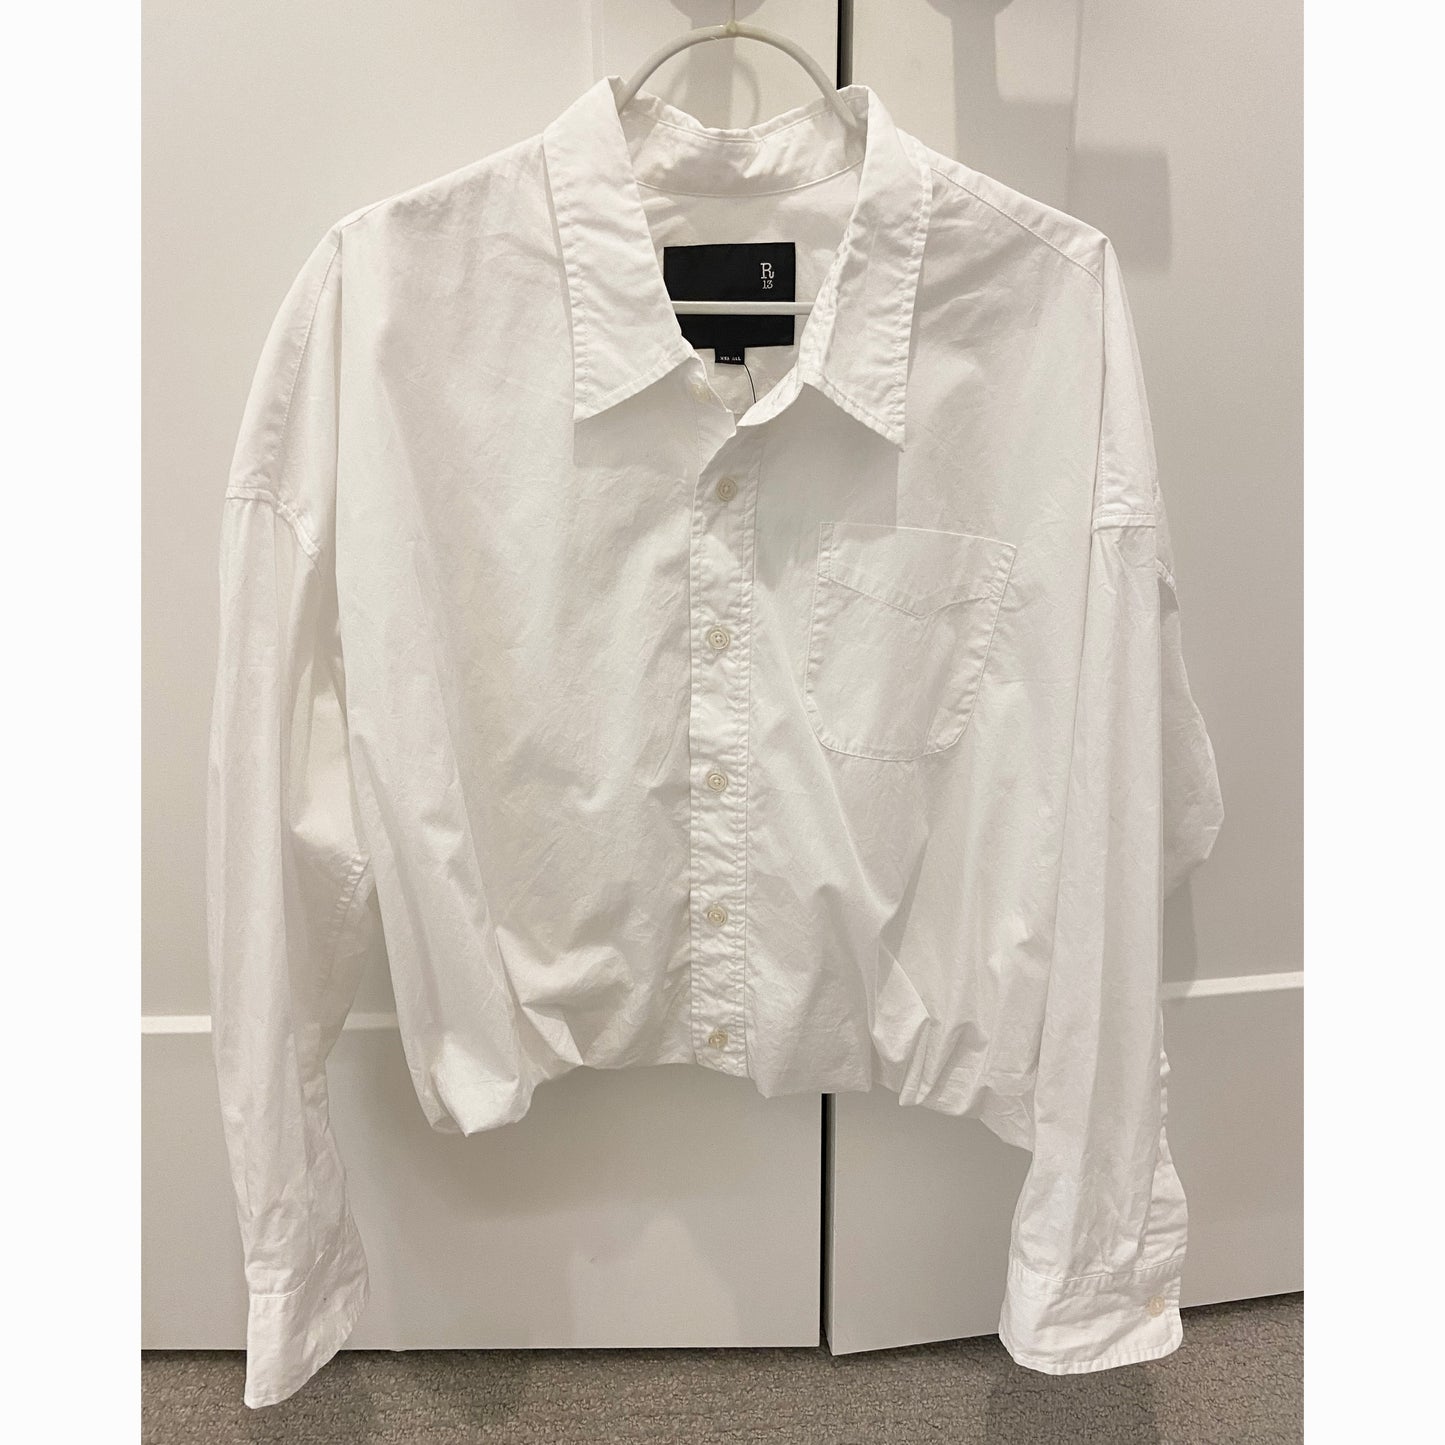 R13 Gathered Hem Shirt in White, size XS